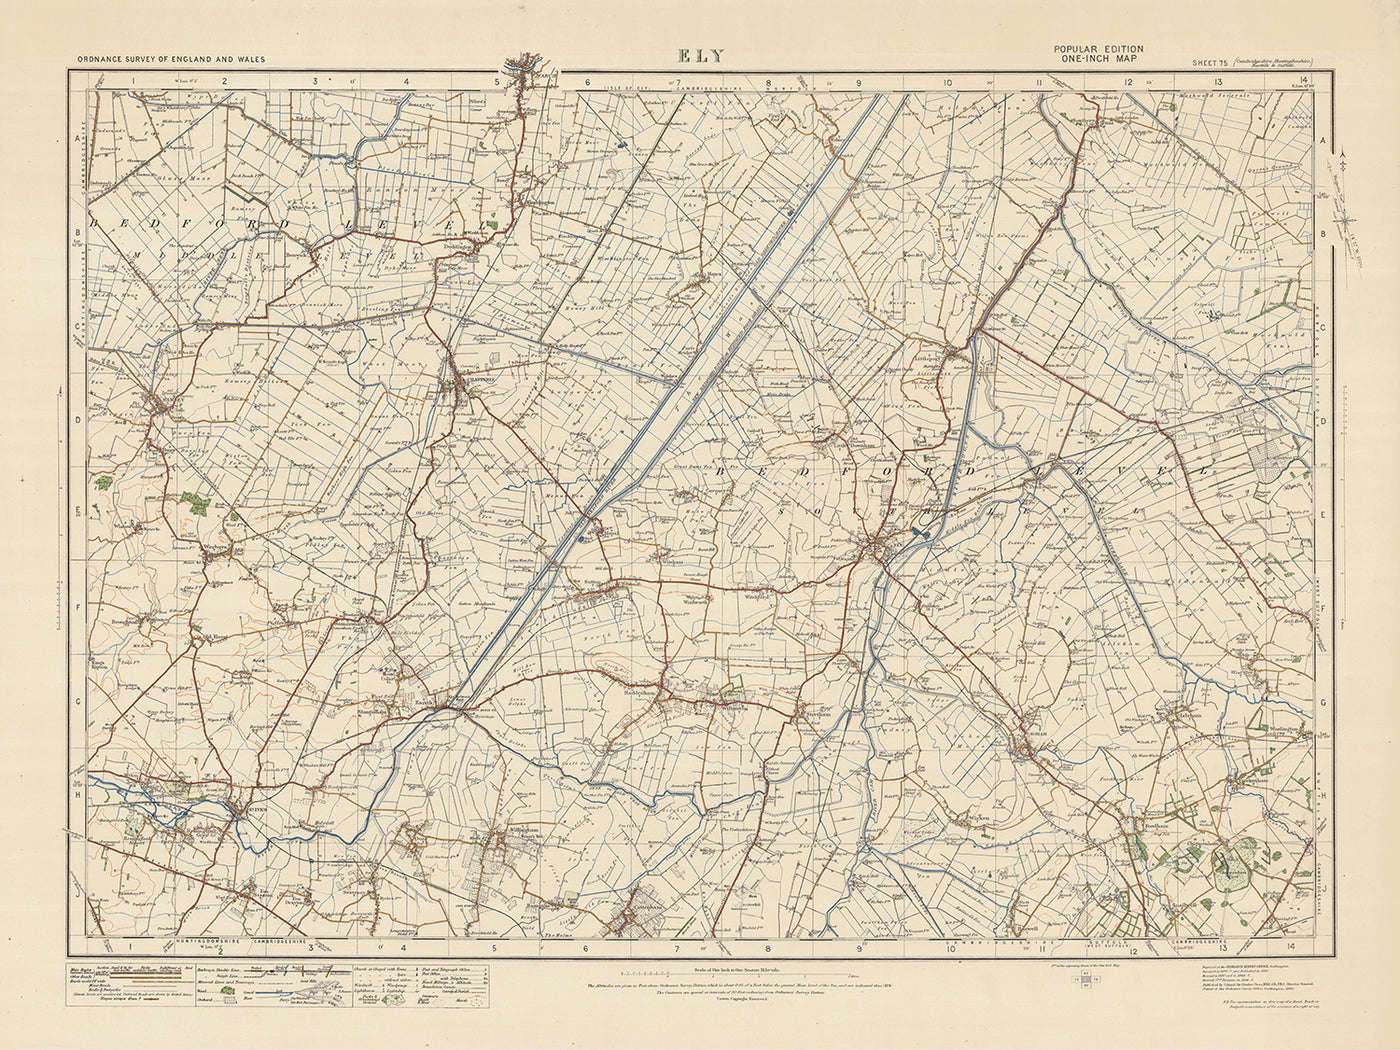 Old Ordnance Survey Map, Blatt 75 – Ely, 1925: Soham, Ramsey, St. Ives, Chatteris, March